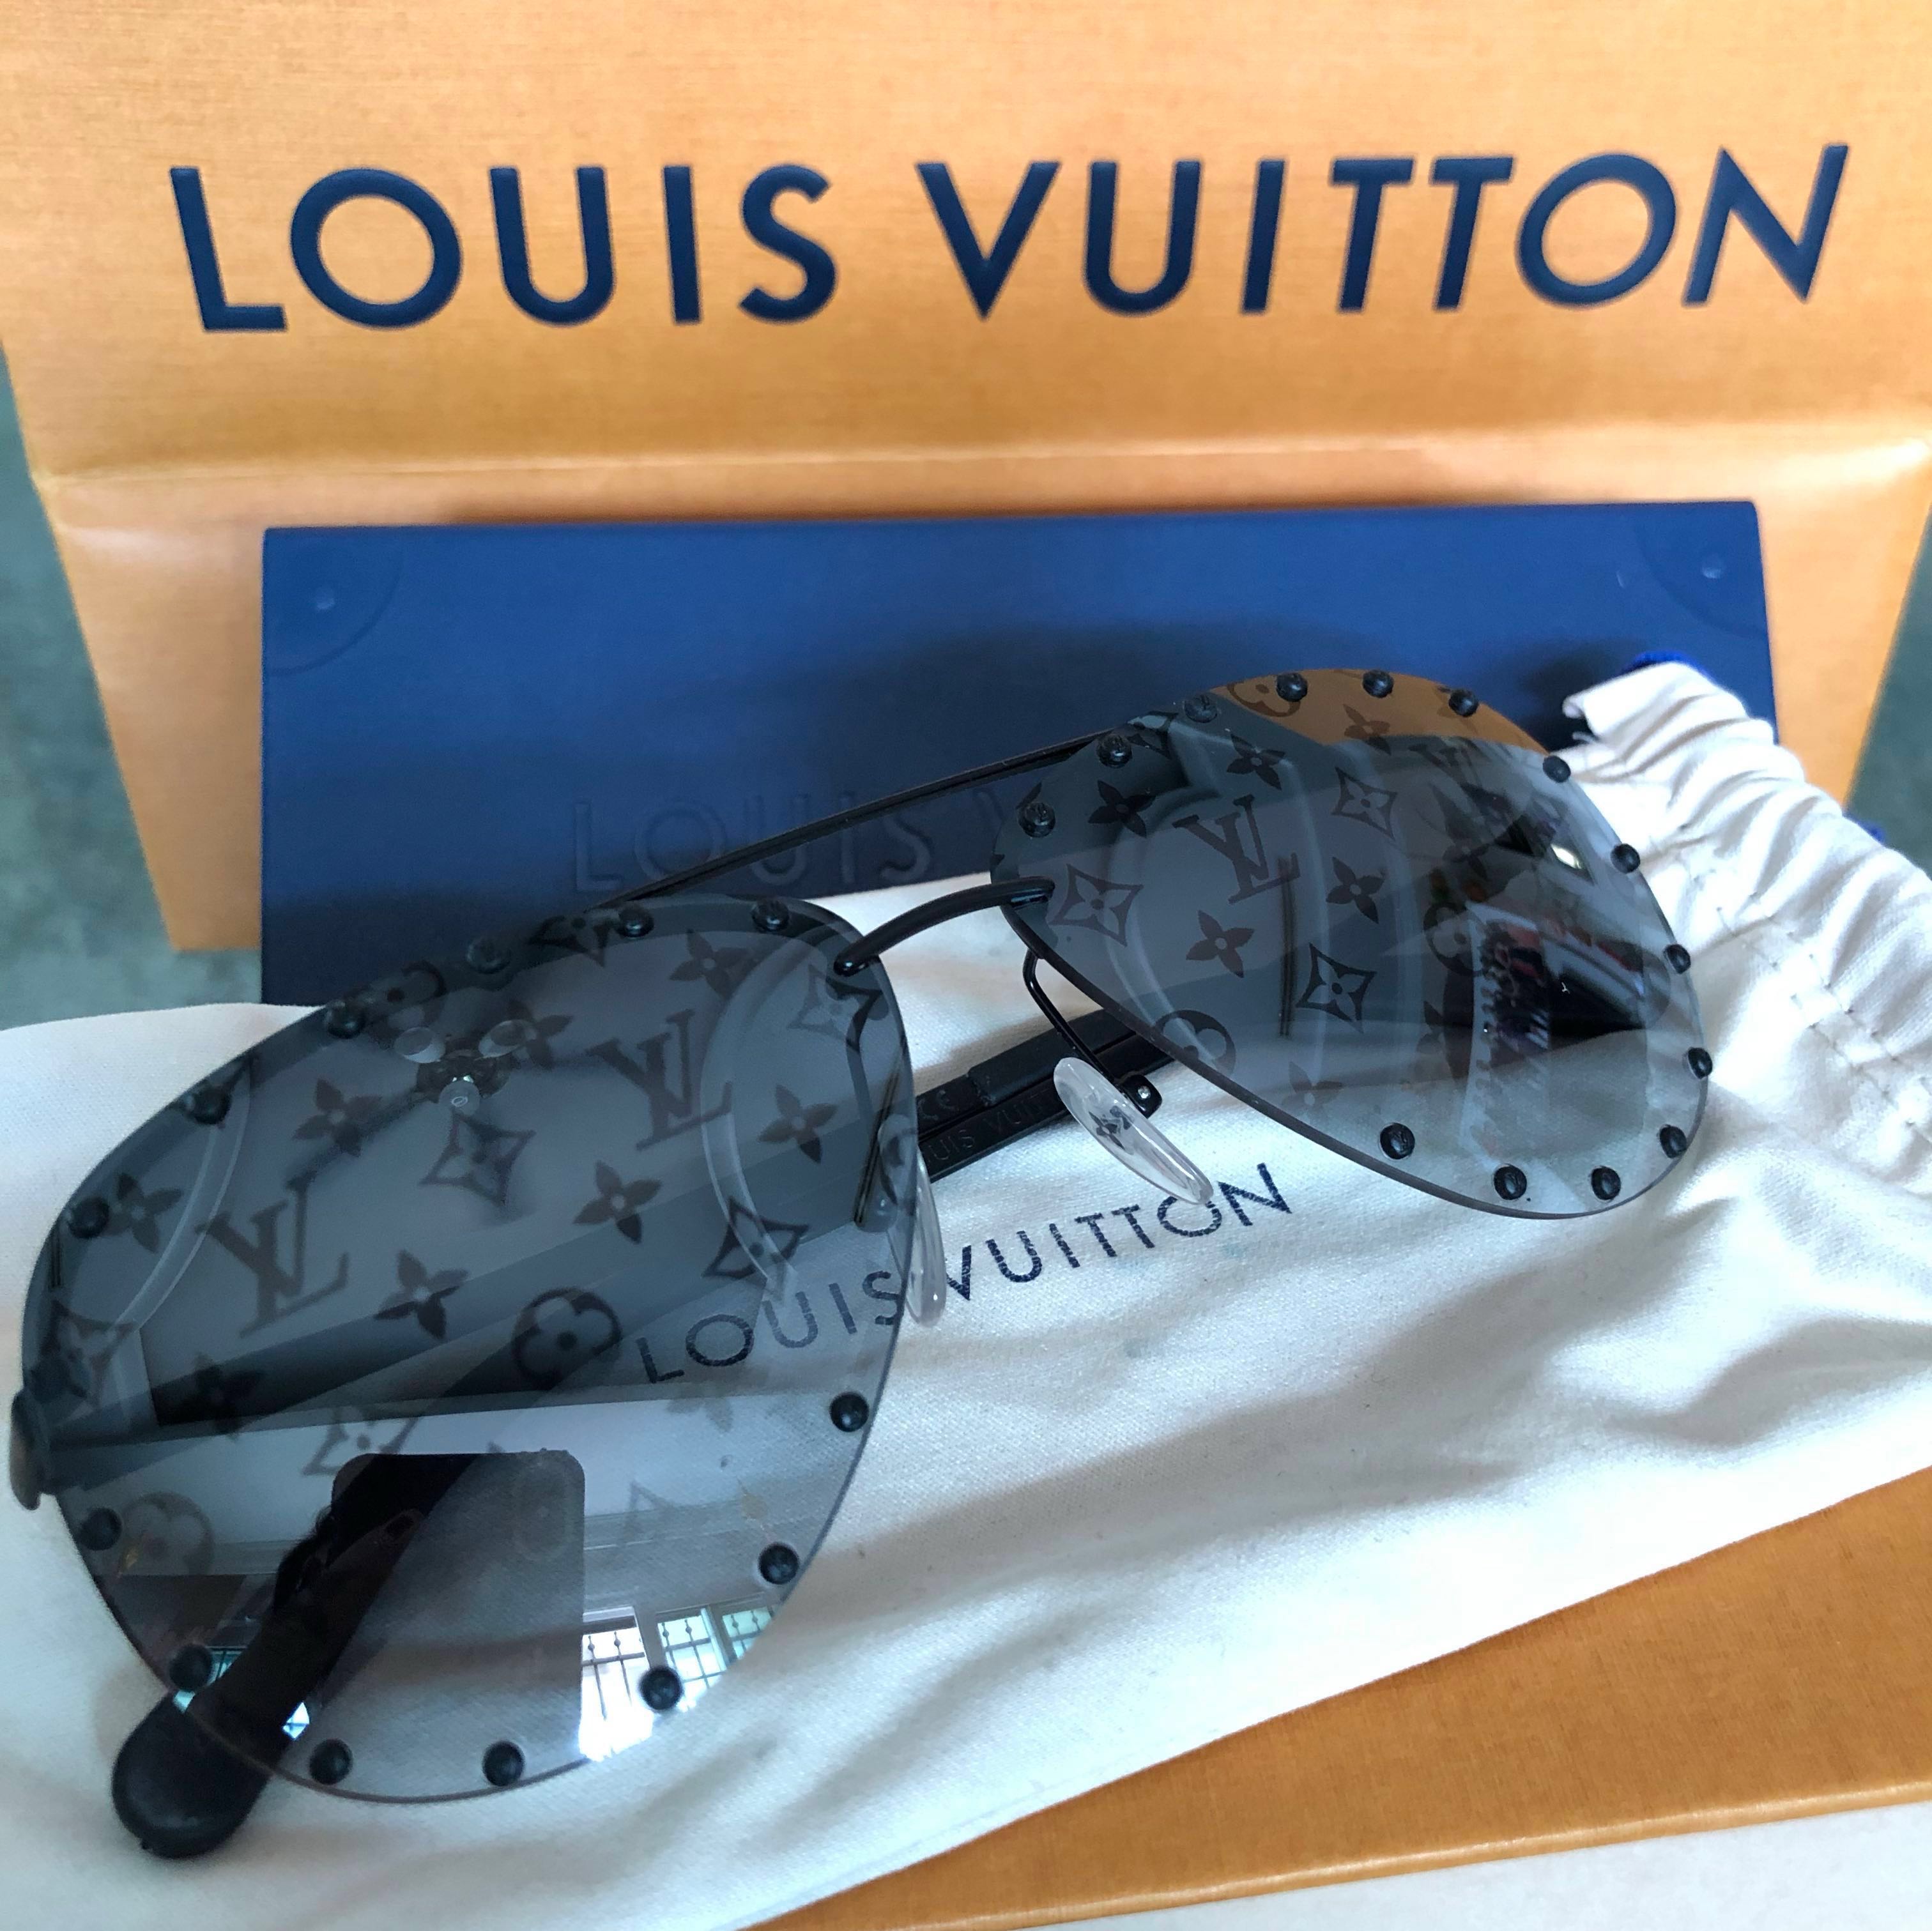 LOUIS VUITTON Z0361U SUNGLASSES 207005855 •, Women's Fashion, Watches &  Accessories, Sunglasses & Eyewear on Carousell